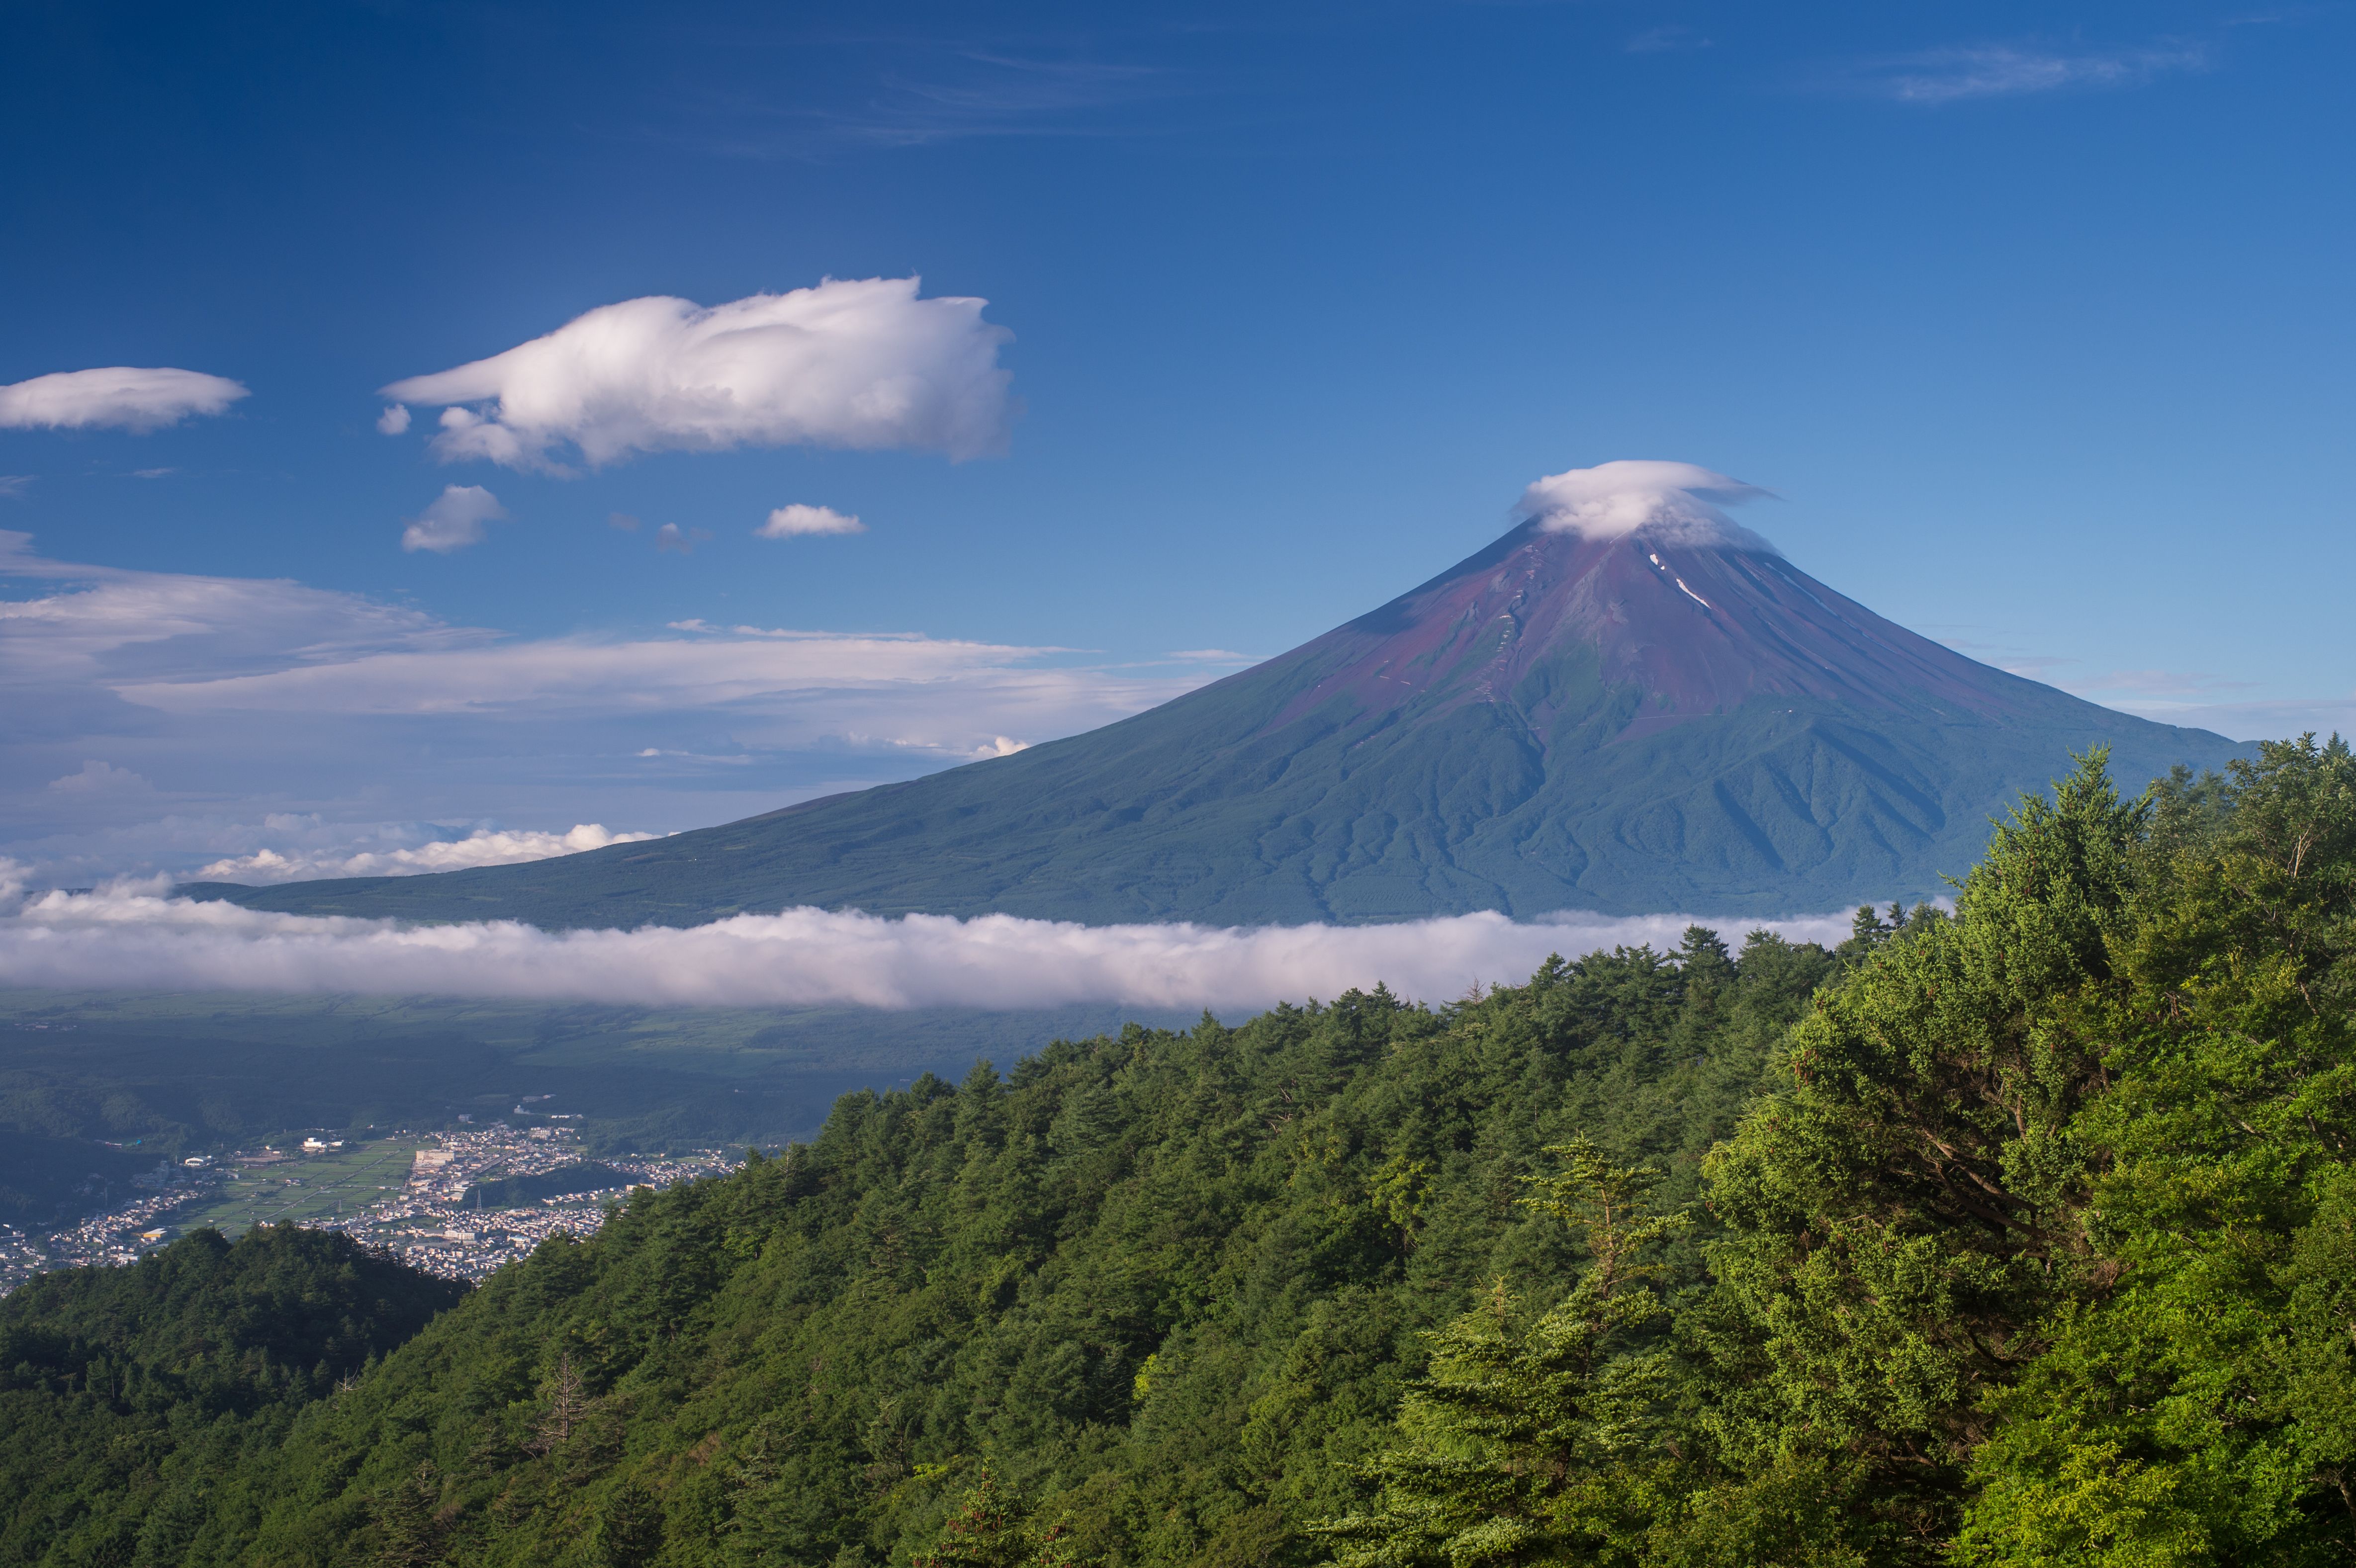 Mount Fuji 4k Ultra HD Wallpaper | Background Image | 4738x3154